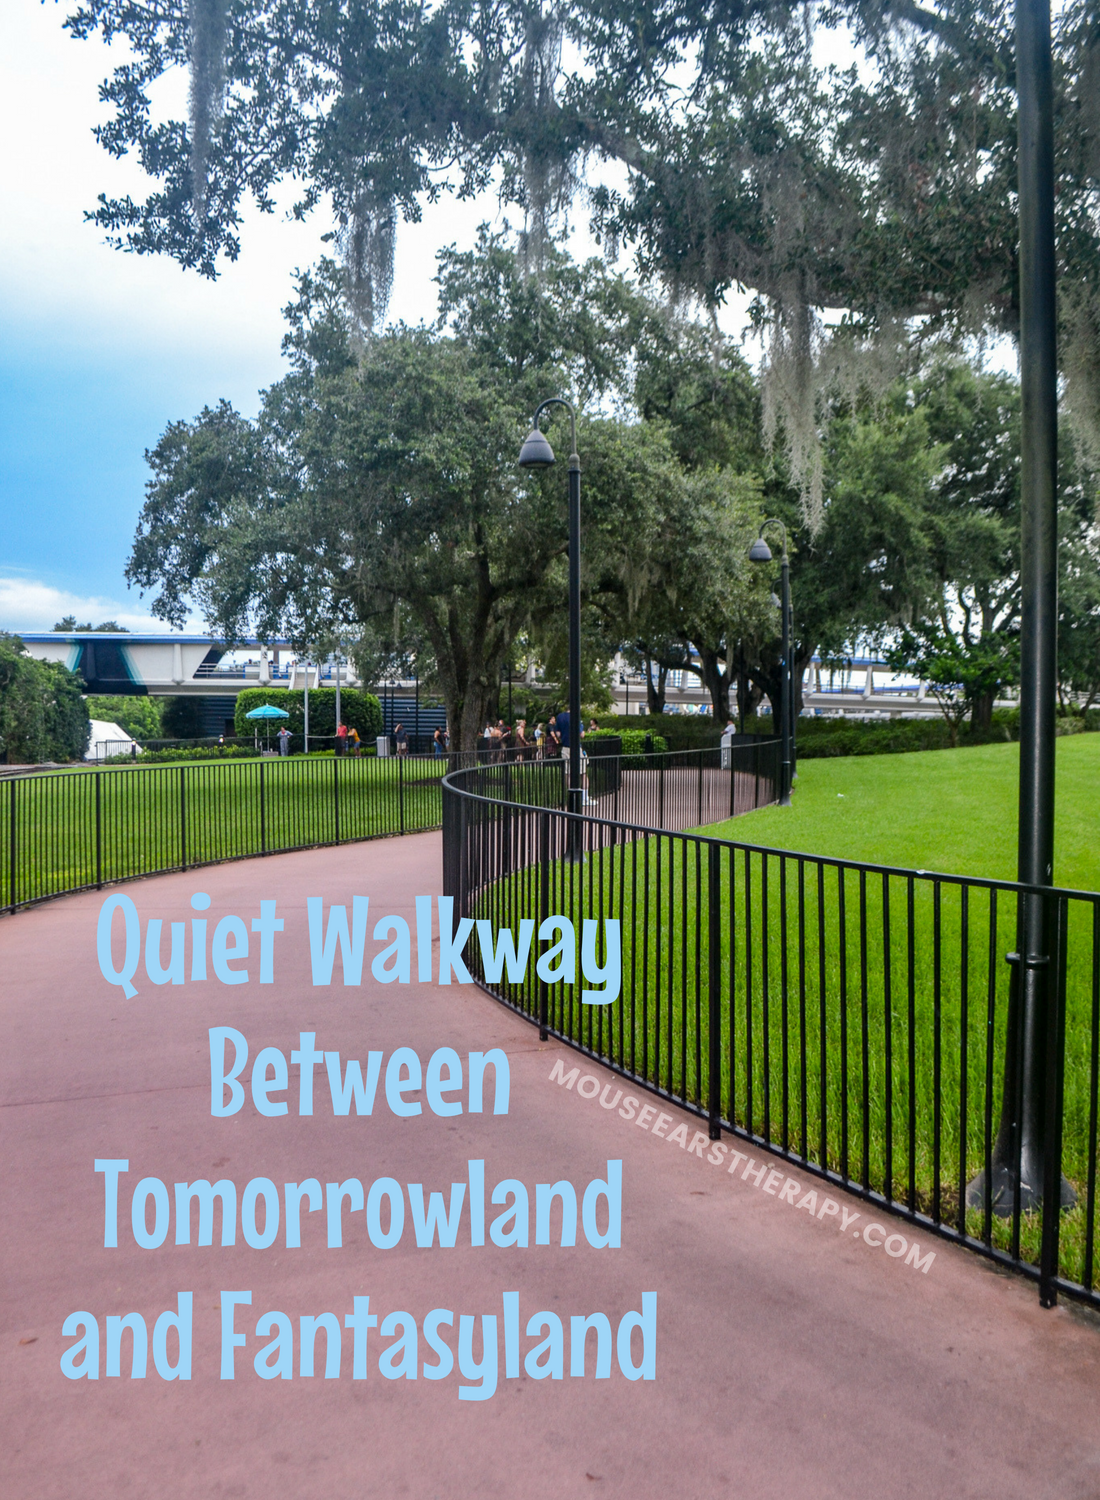 The quiet walkway between Tomorrowland and Fantasyland is a great sensory break area in Disney's Magic Kingdom 